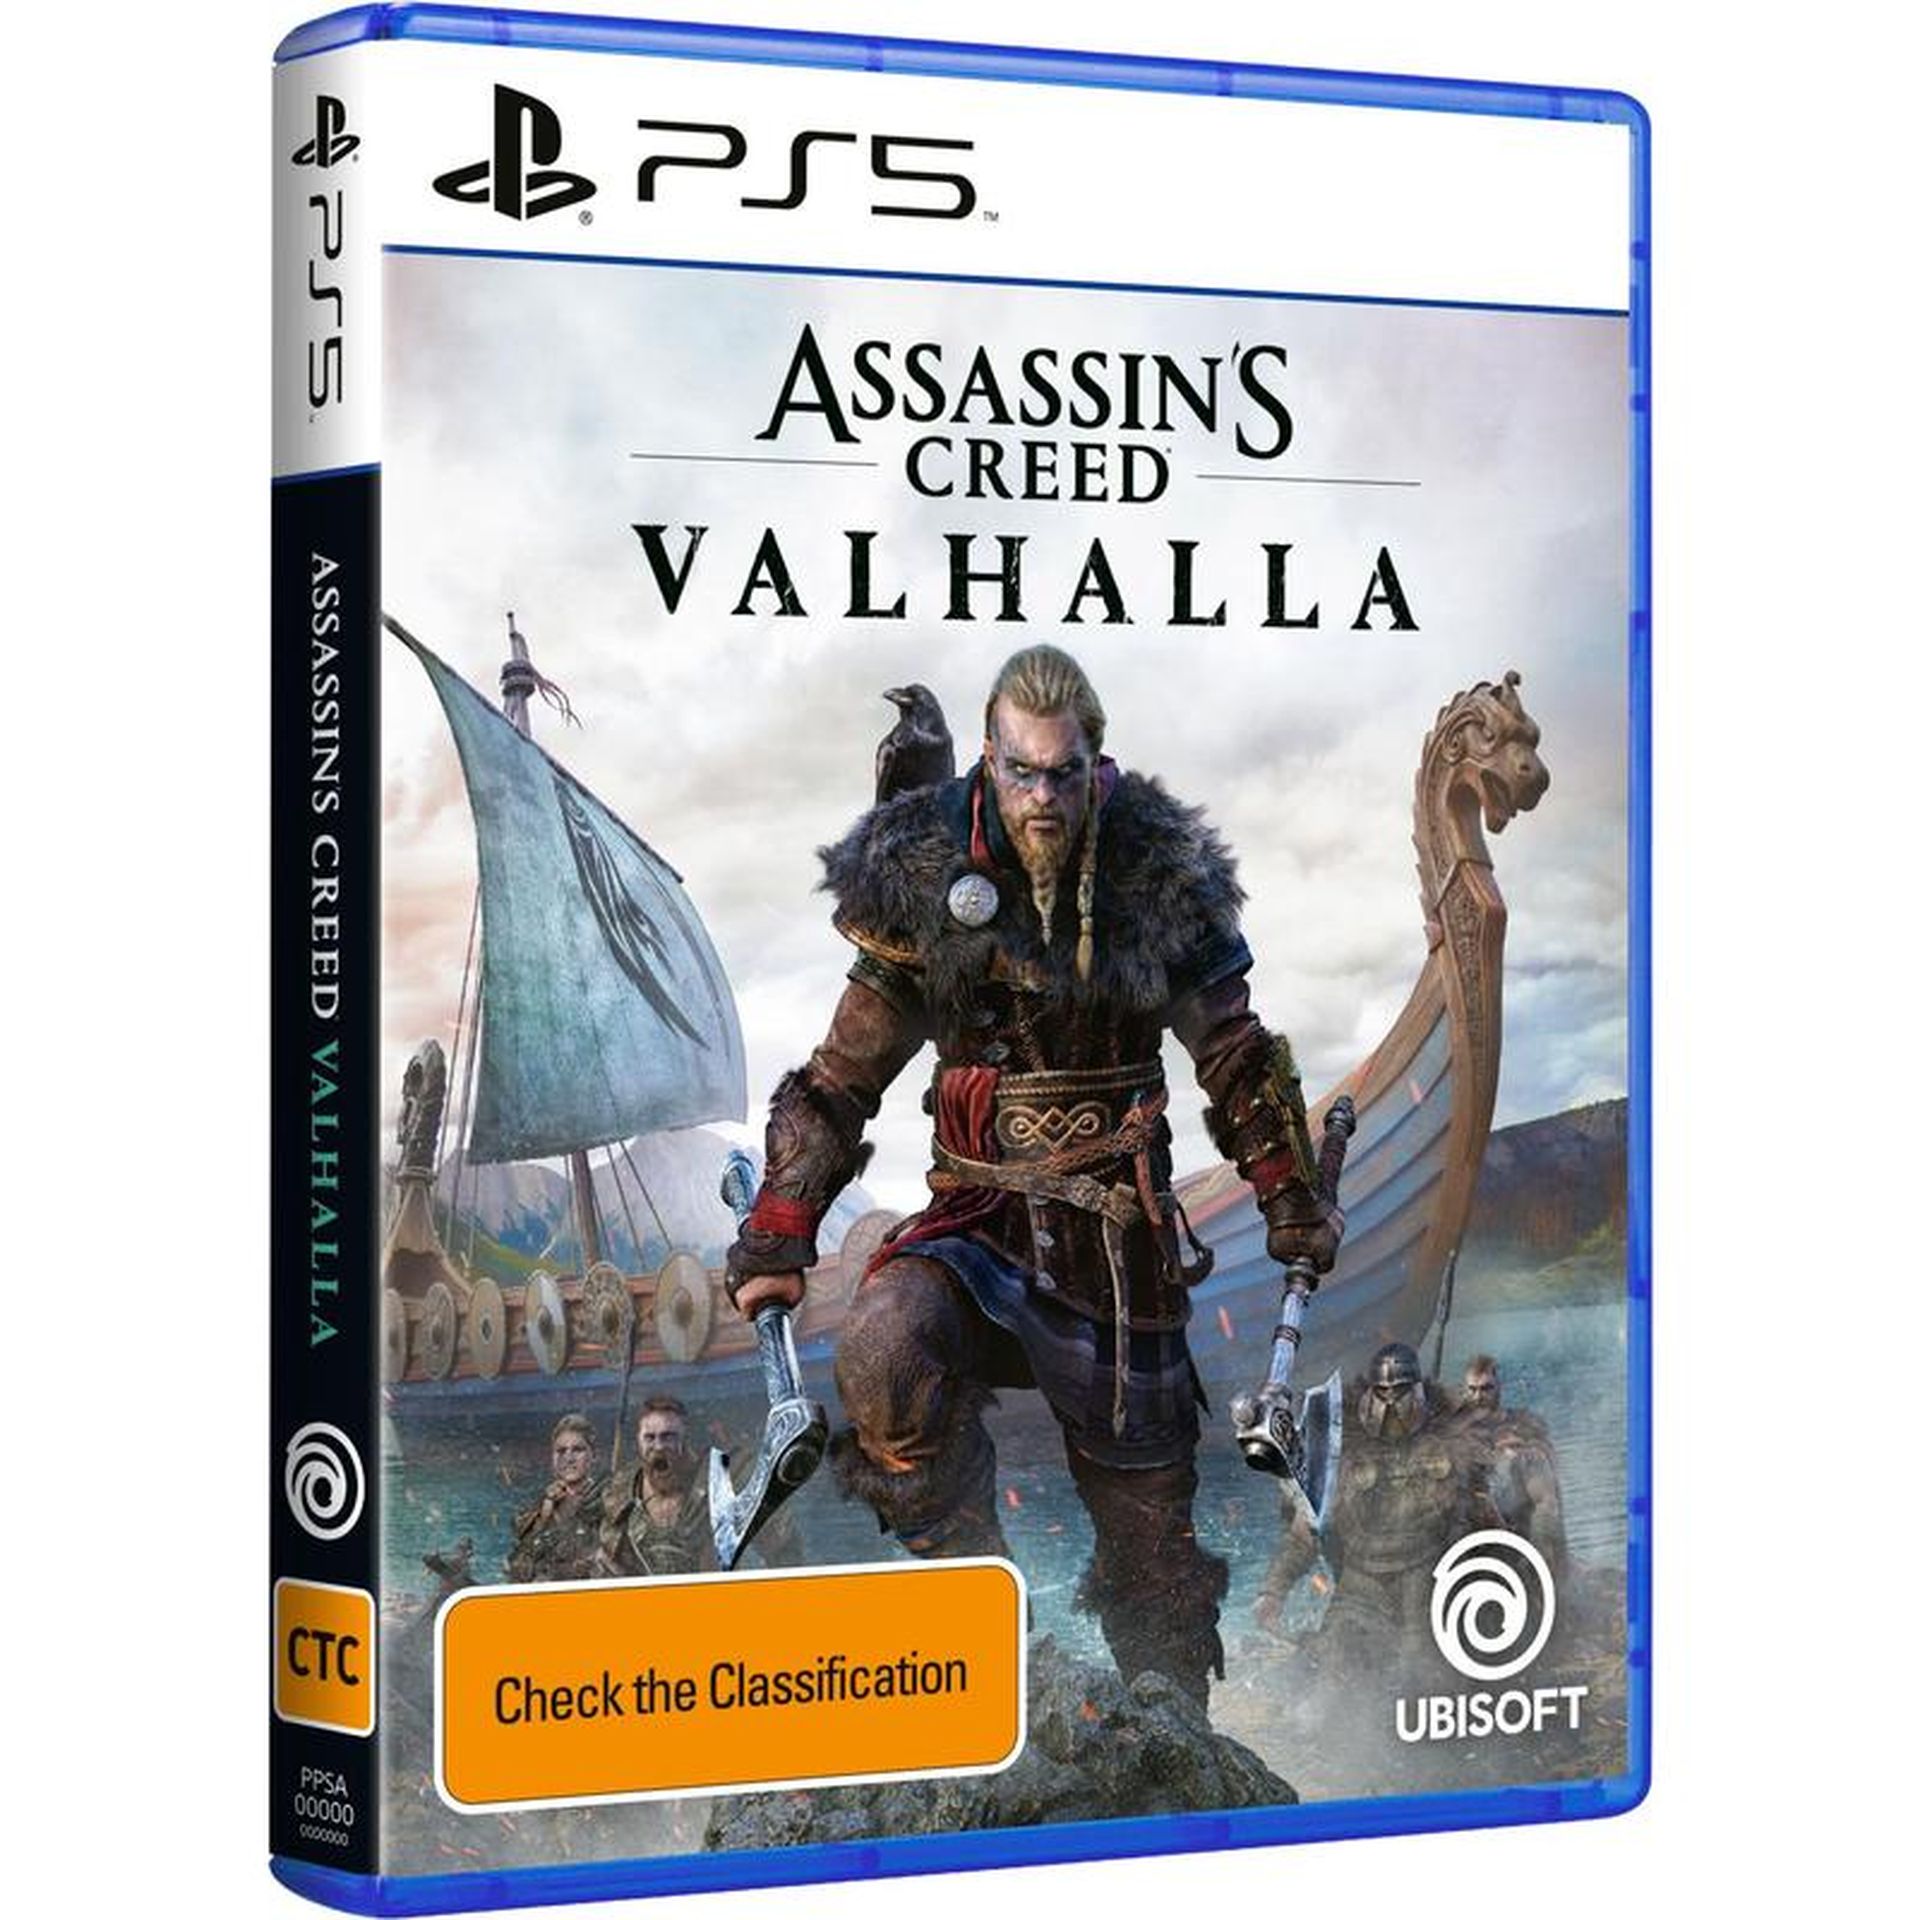 Ps5 какие игры вышли. Assassin's Creed Valhalla диск пс5. Диск ассасин на ПС 5. Assassin's Creed Valhalla ps4. Диск ассасин на ПС 4.